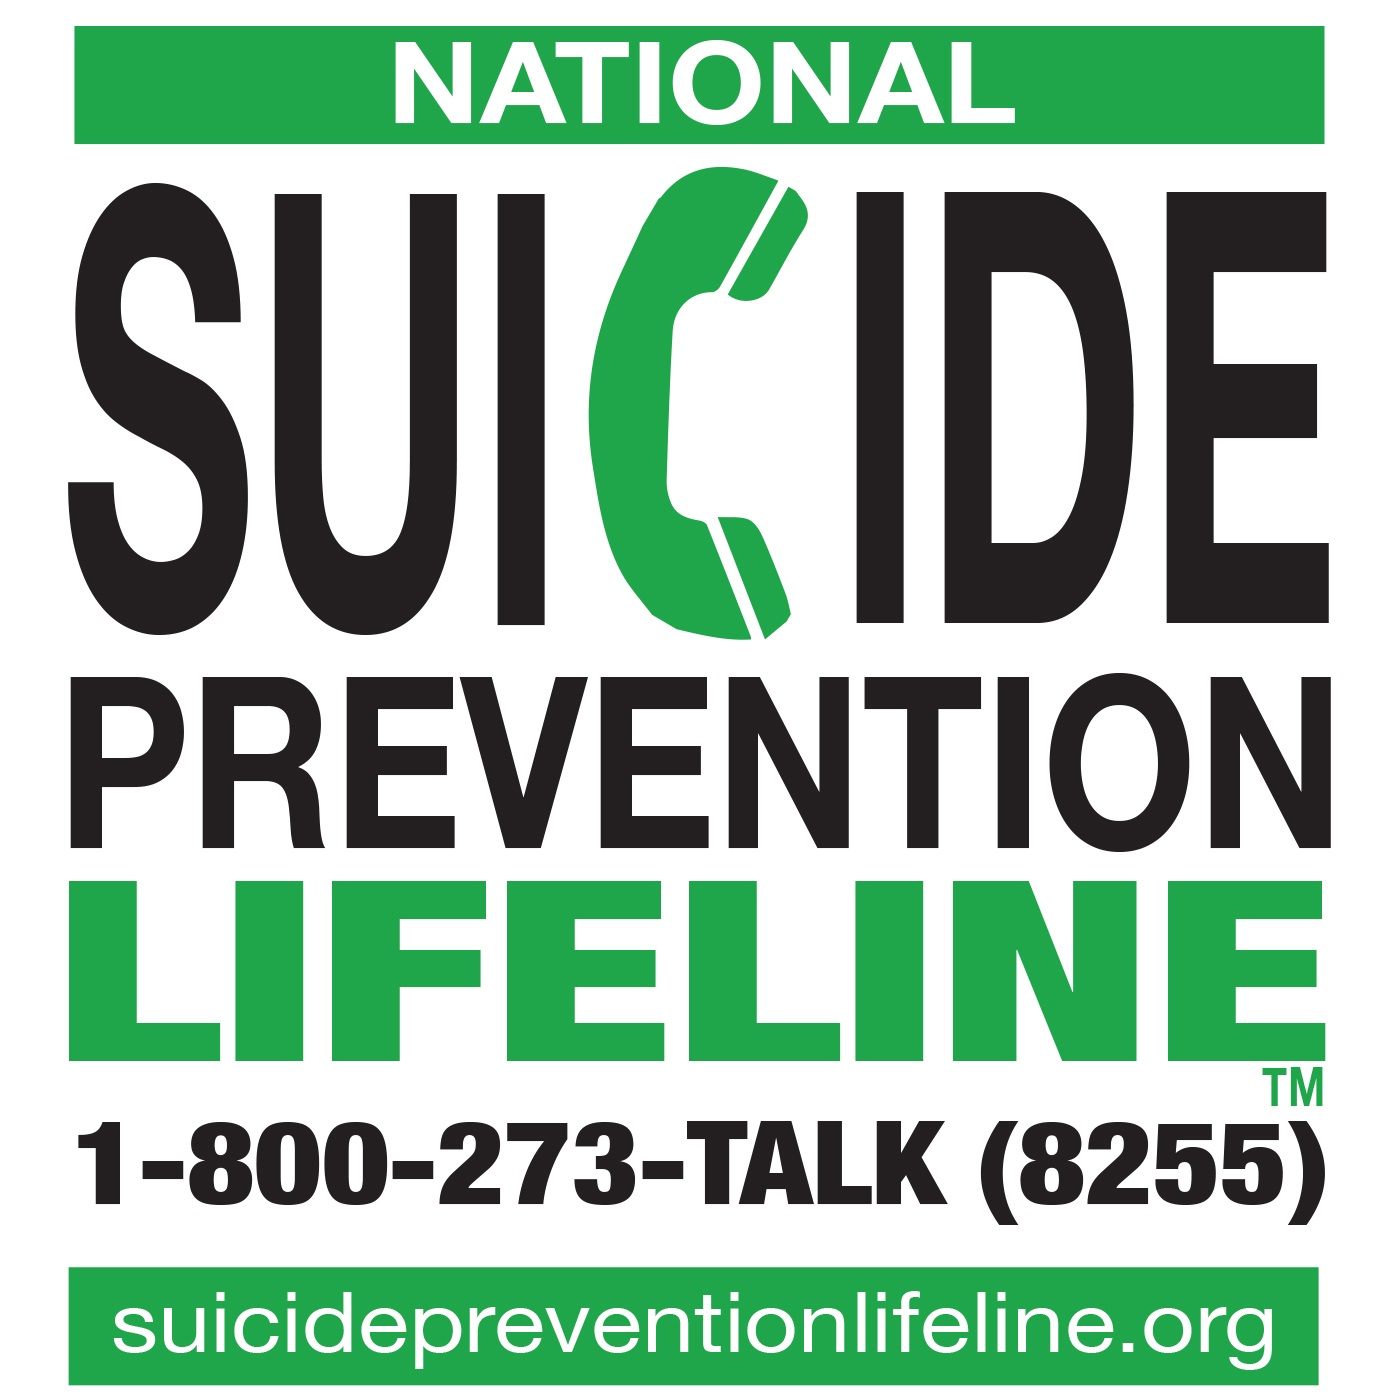 Suicide prevention lifeline